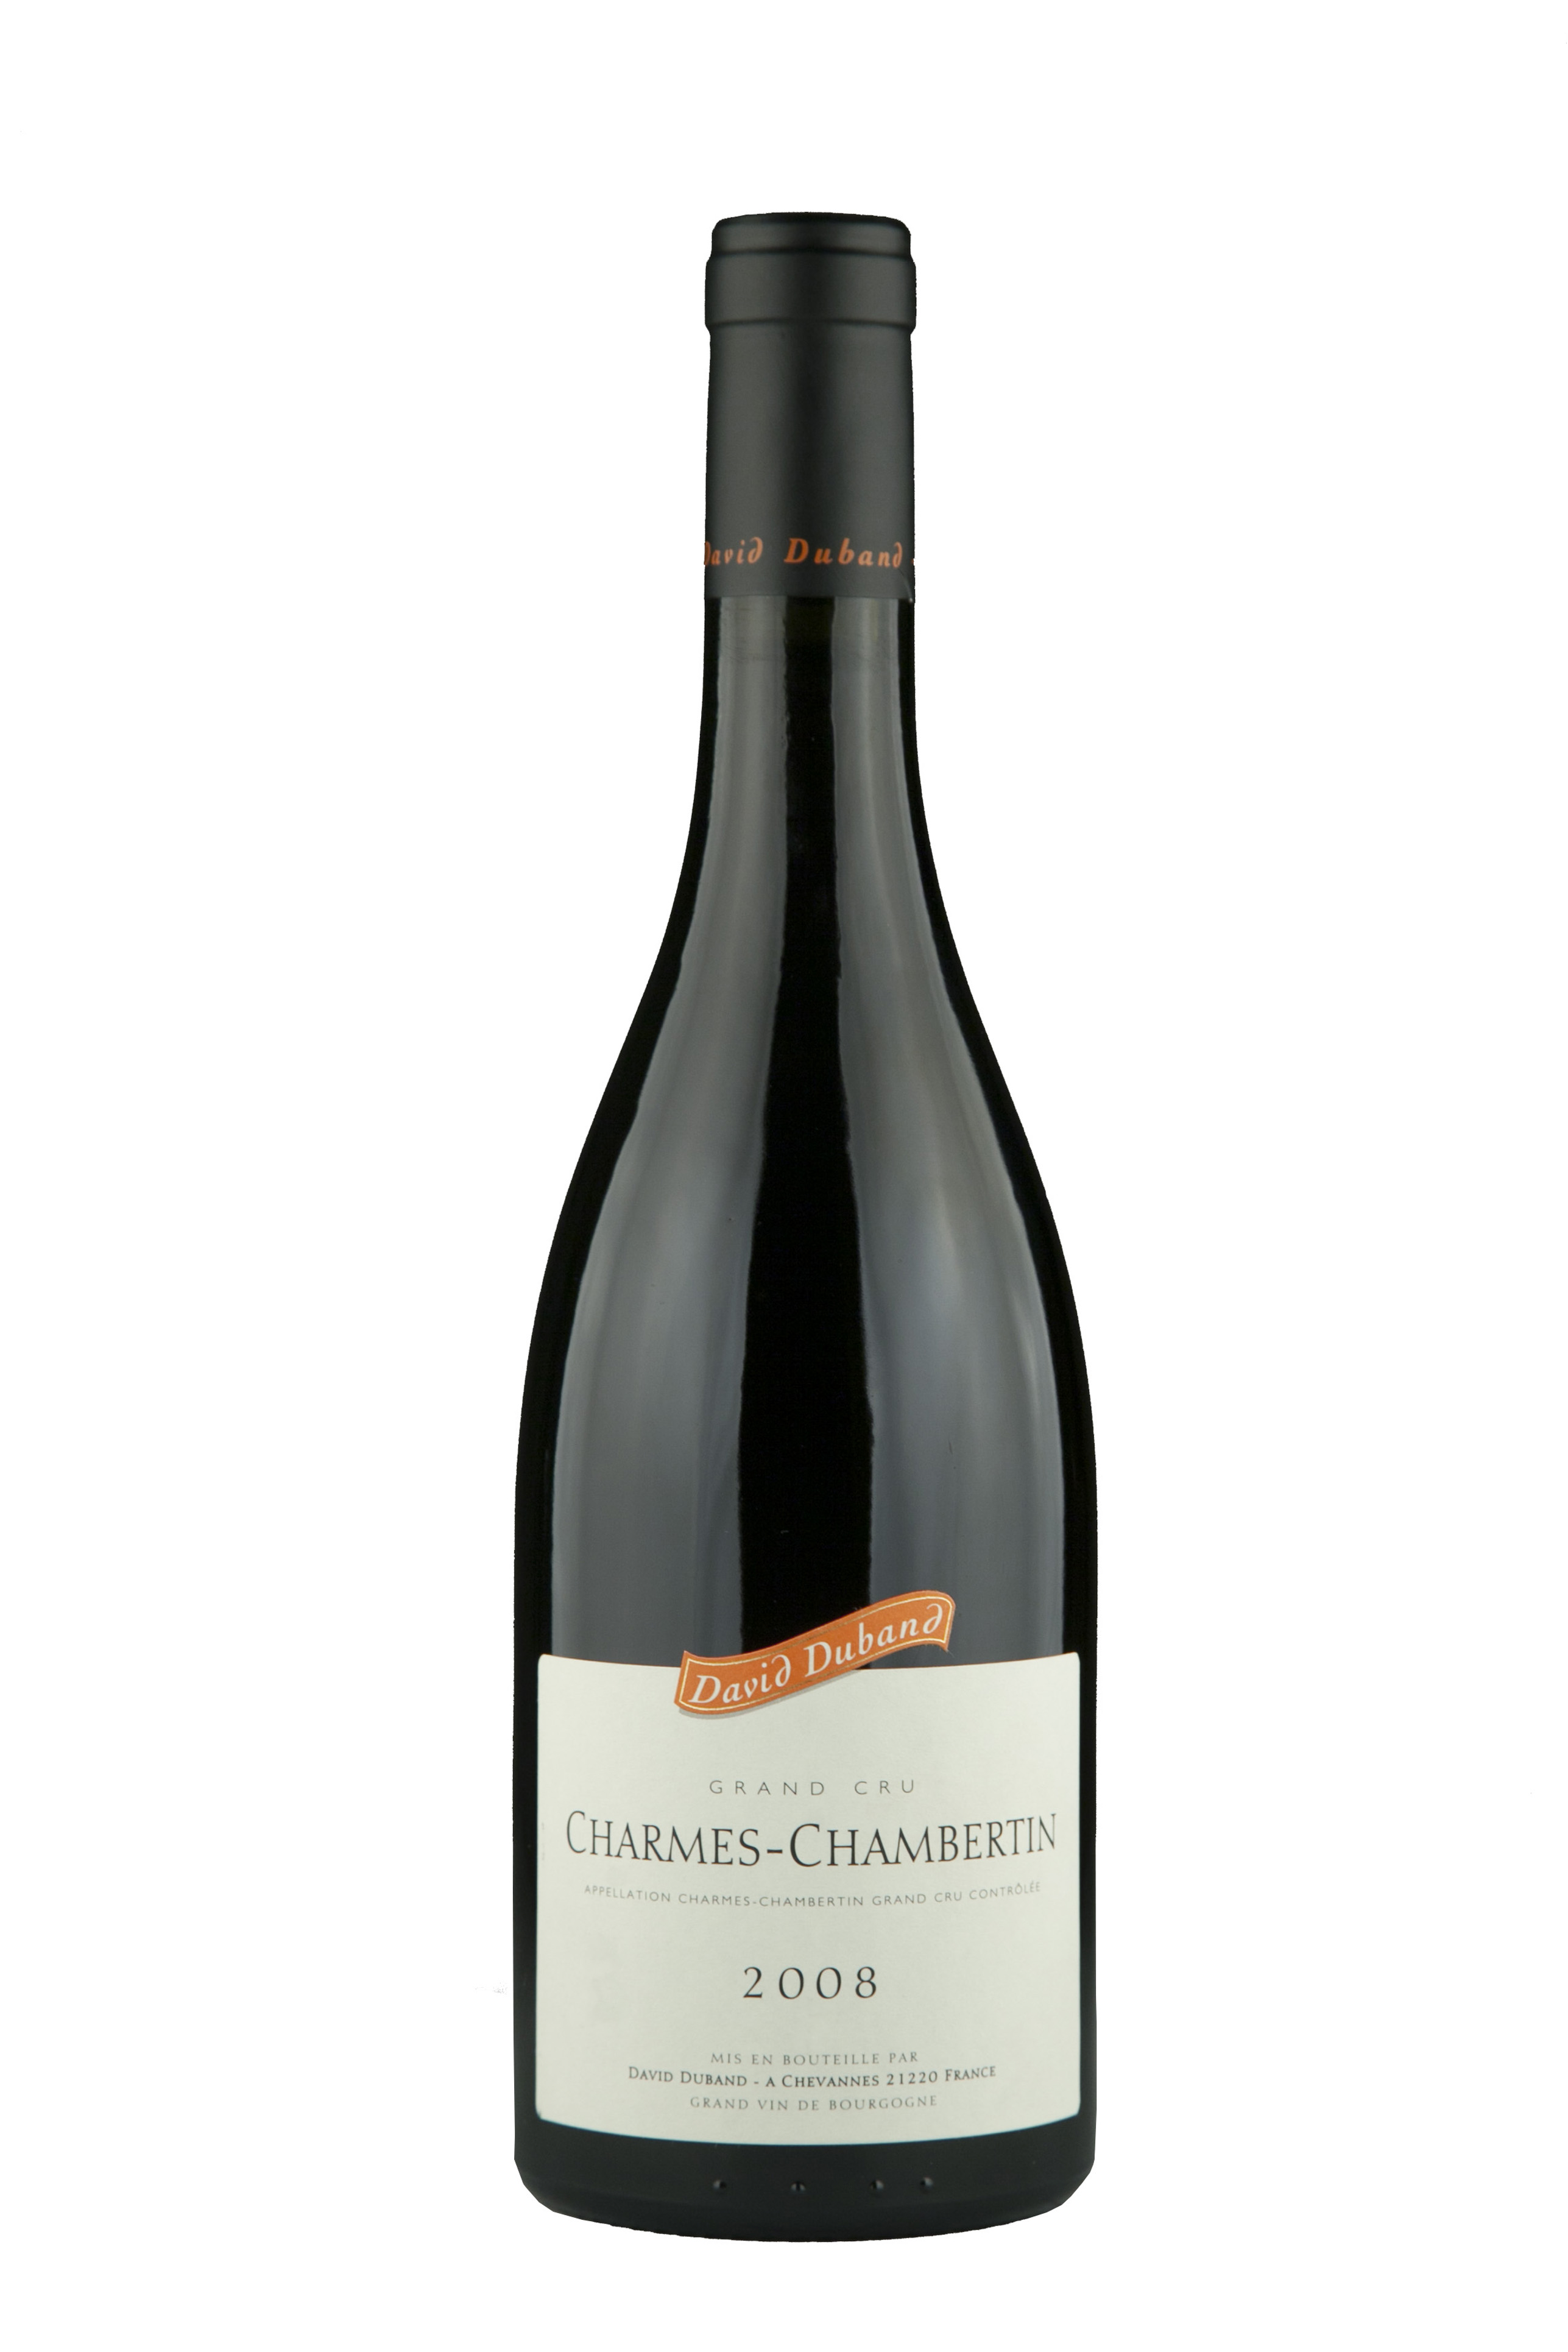 Charmes-Chambertin Grand Cru Domaine David Duband 2008